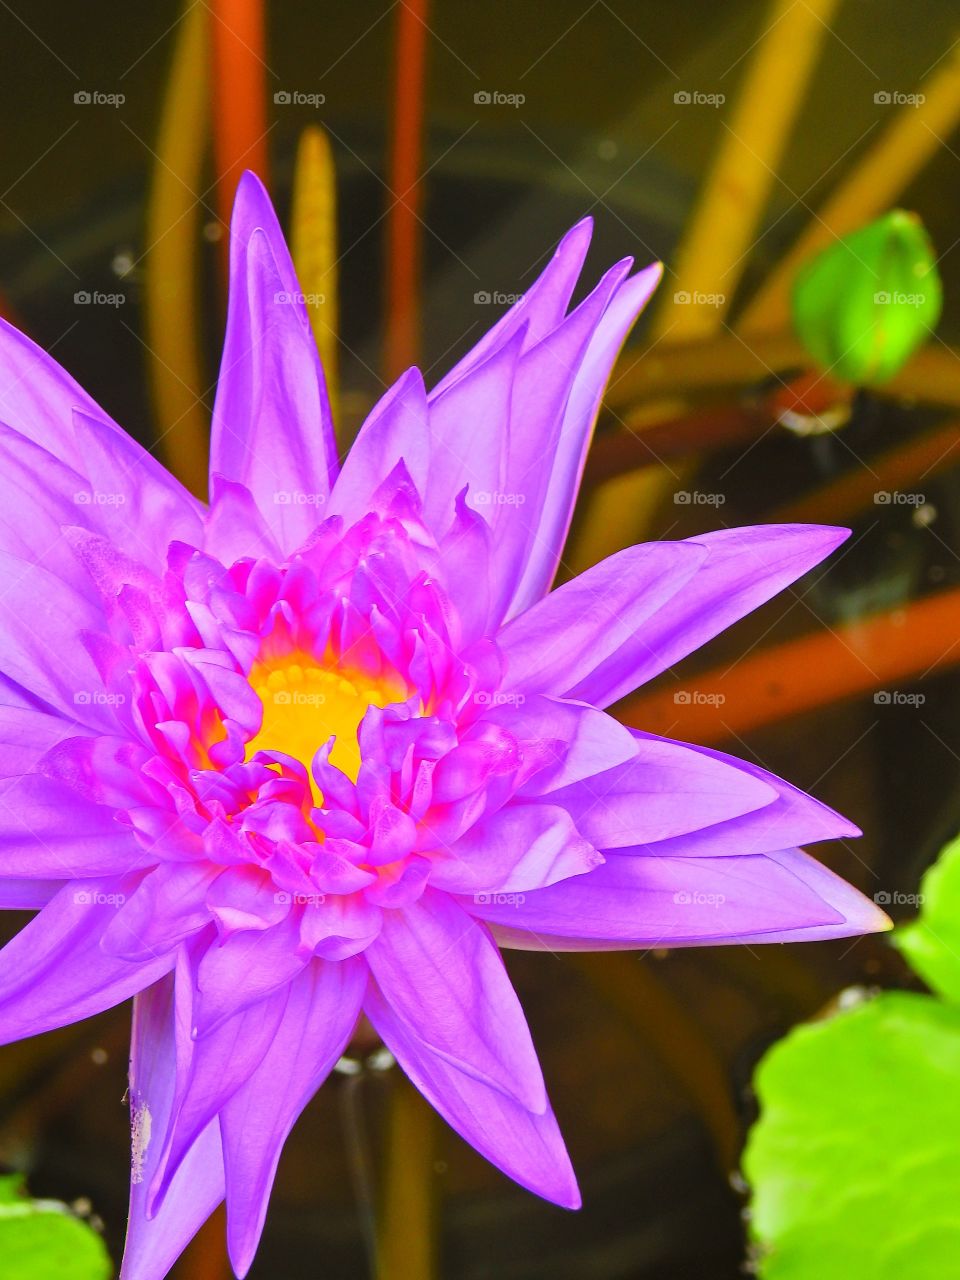 Thai lotus new species, 9 layer petals.